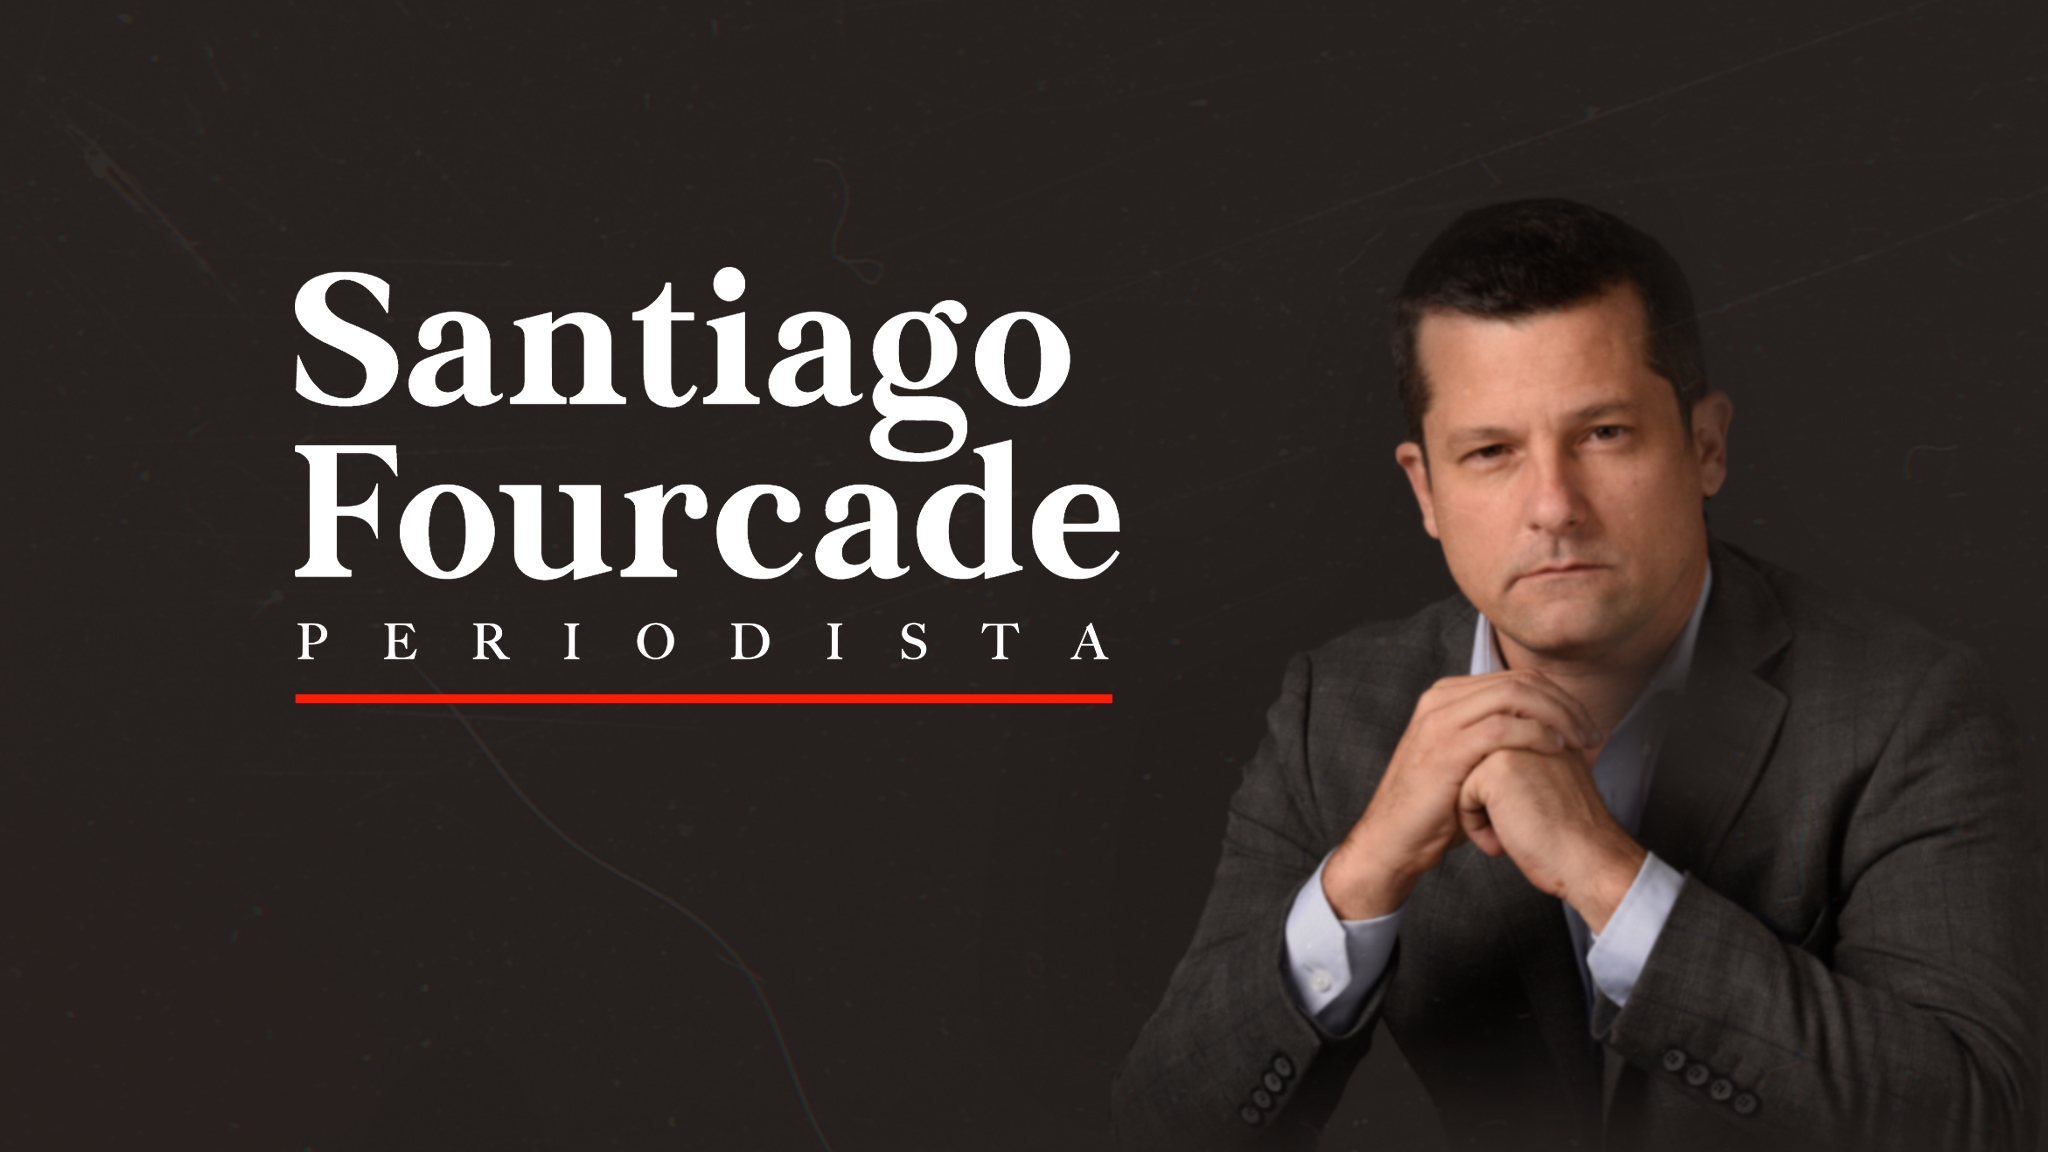 Santiago Fourcade se une al talento exclusivo de TDG Records & Management